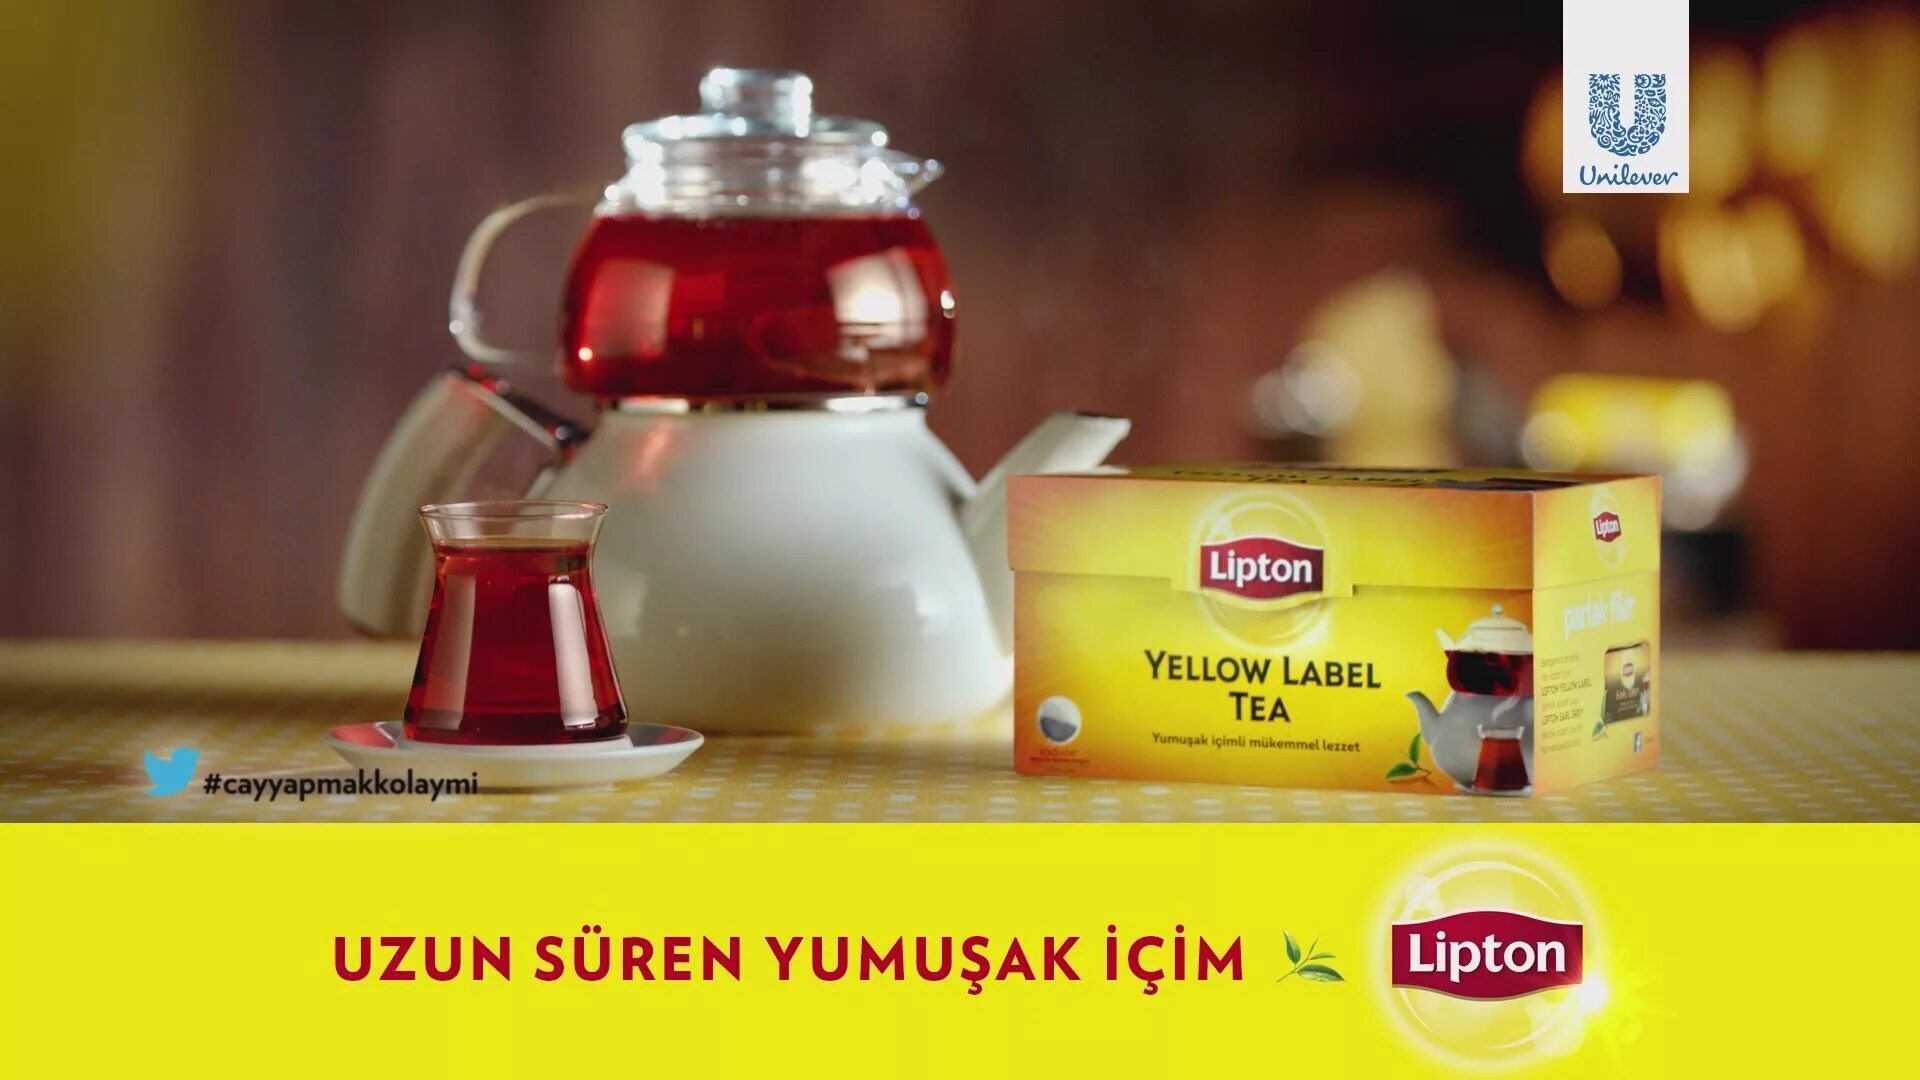 Lipton. Реклама чая Липтон. Чайник из рекламы Липтон. Липтон в бутылке.